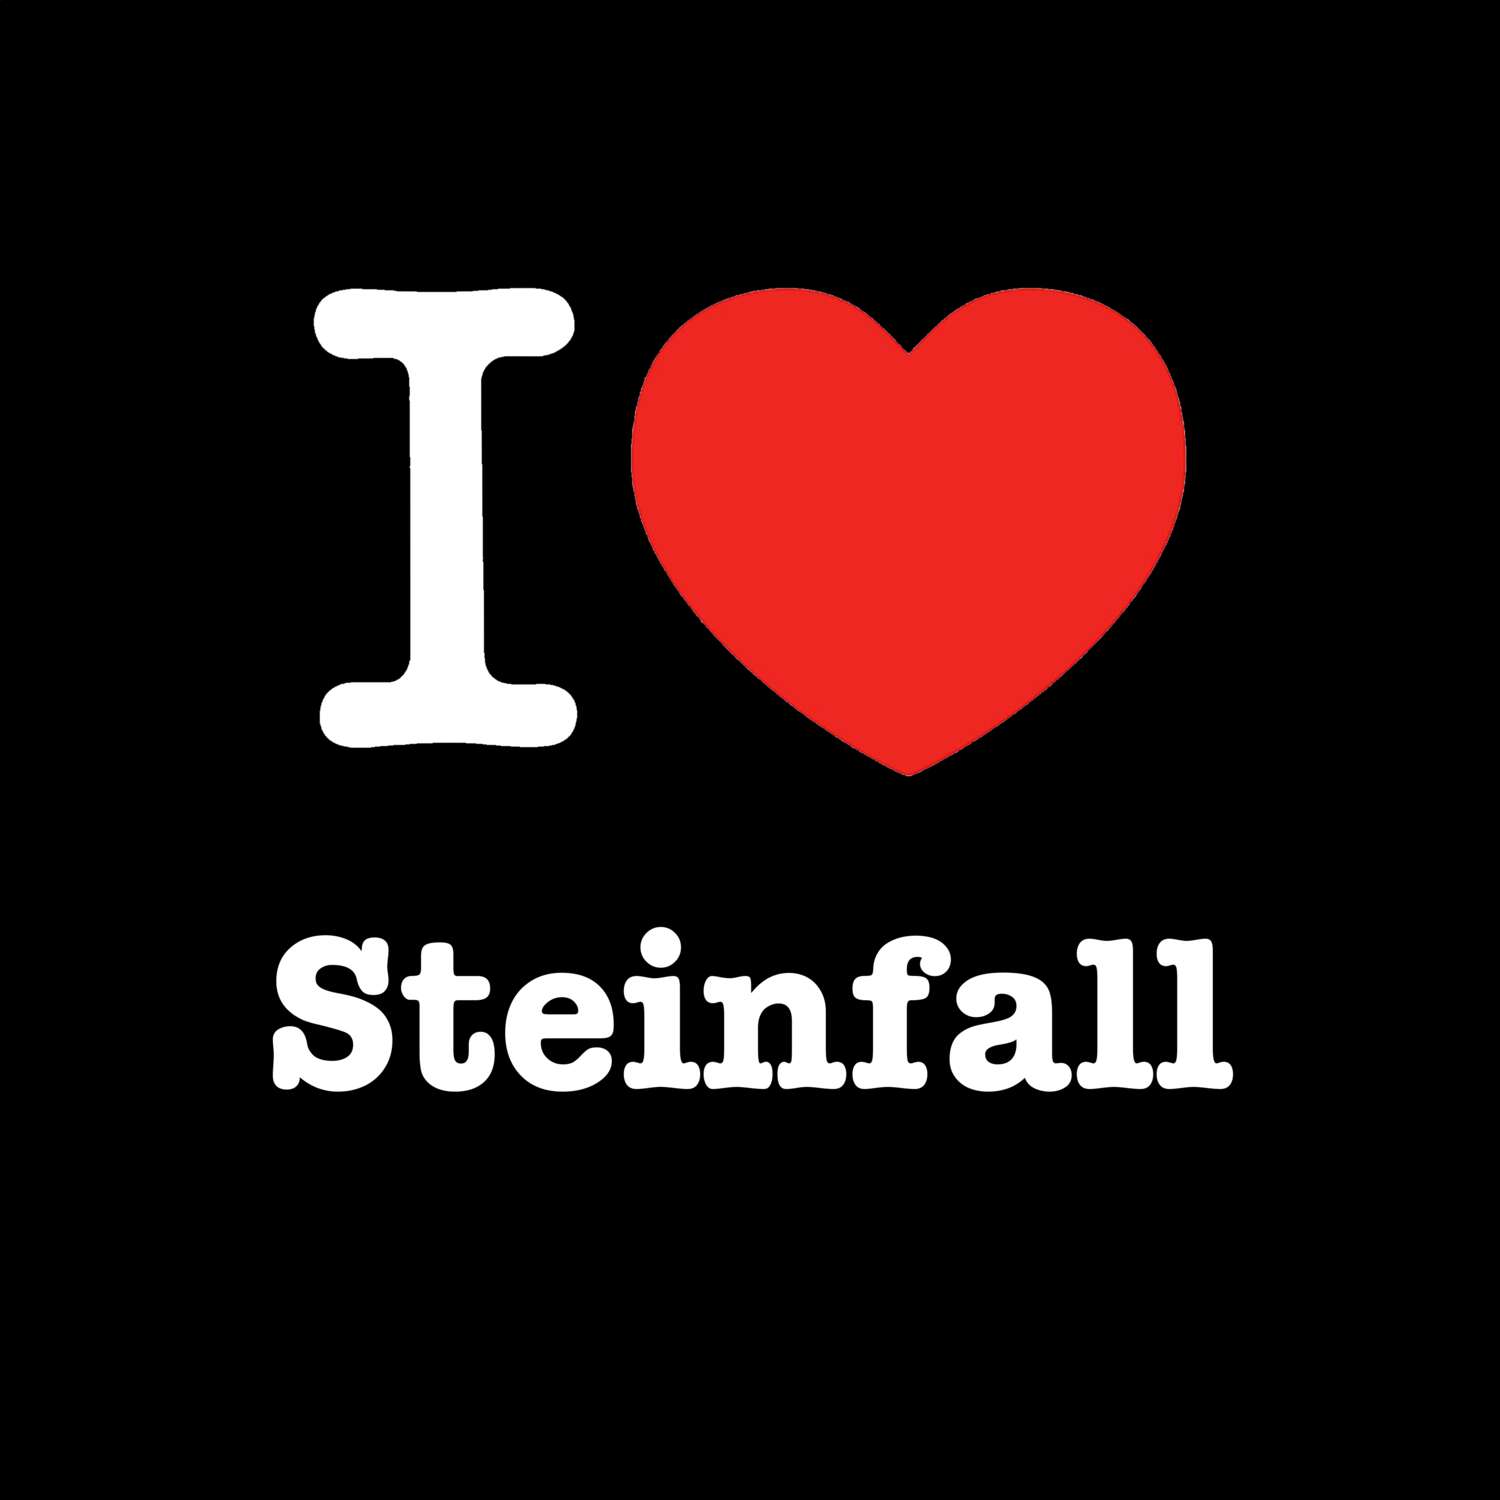 Steinfall T-Shirt »I love«